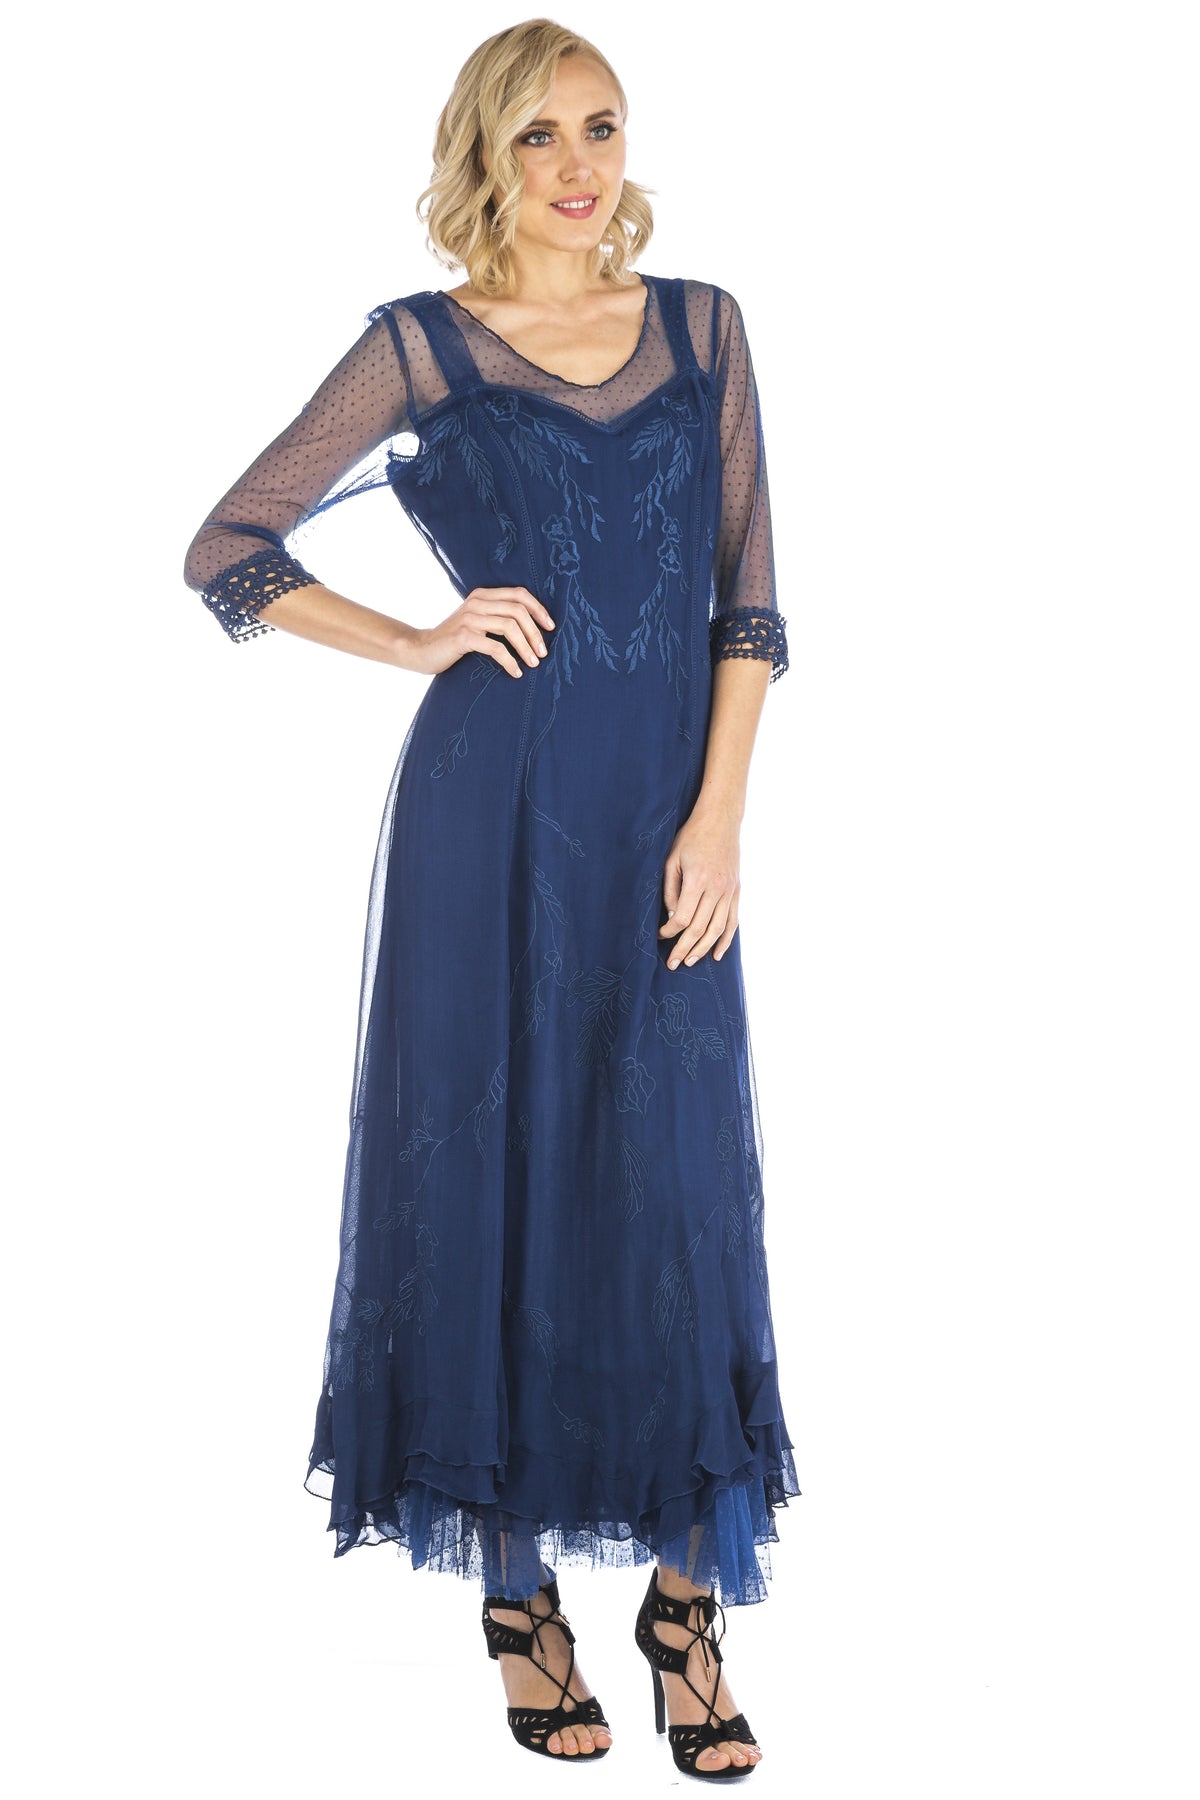 True Romance by Nataya Celine CL-068 Royal Blue Gown